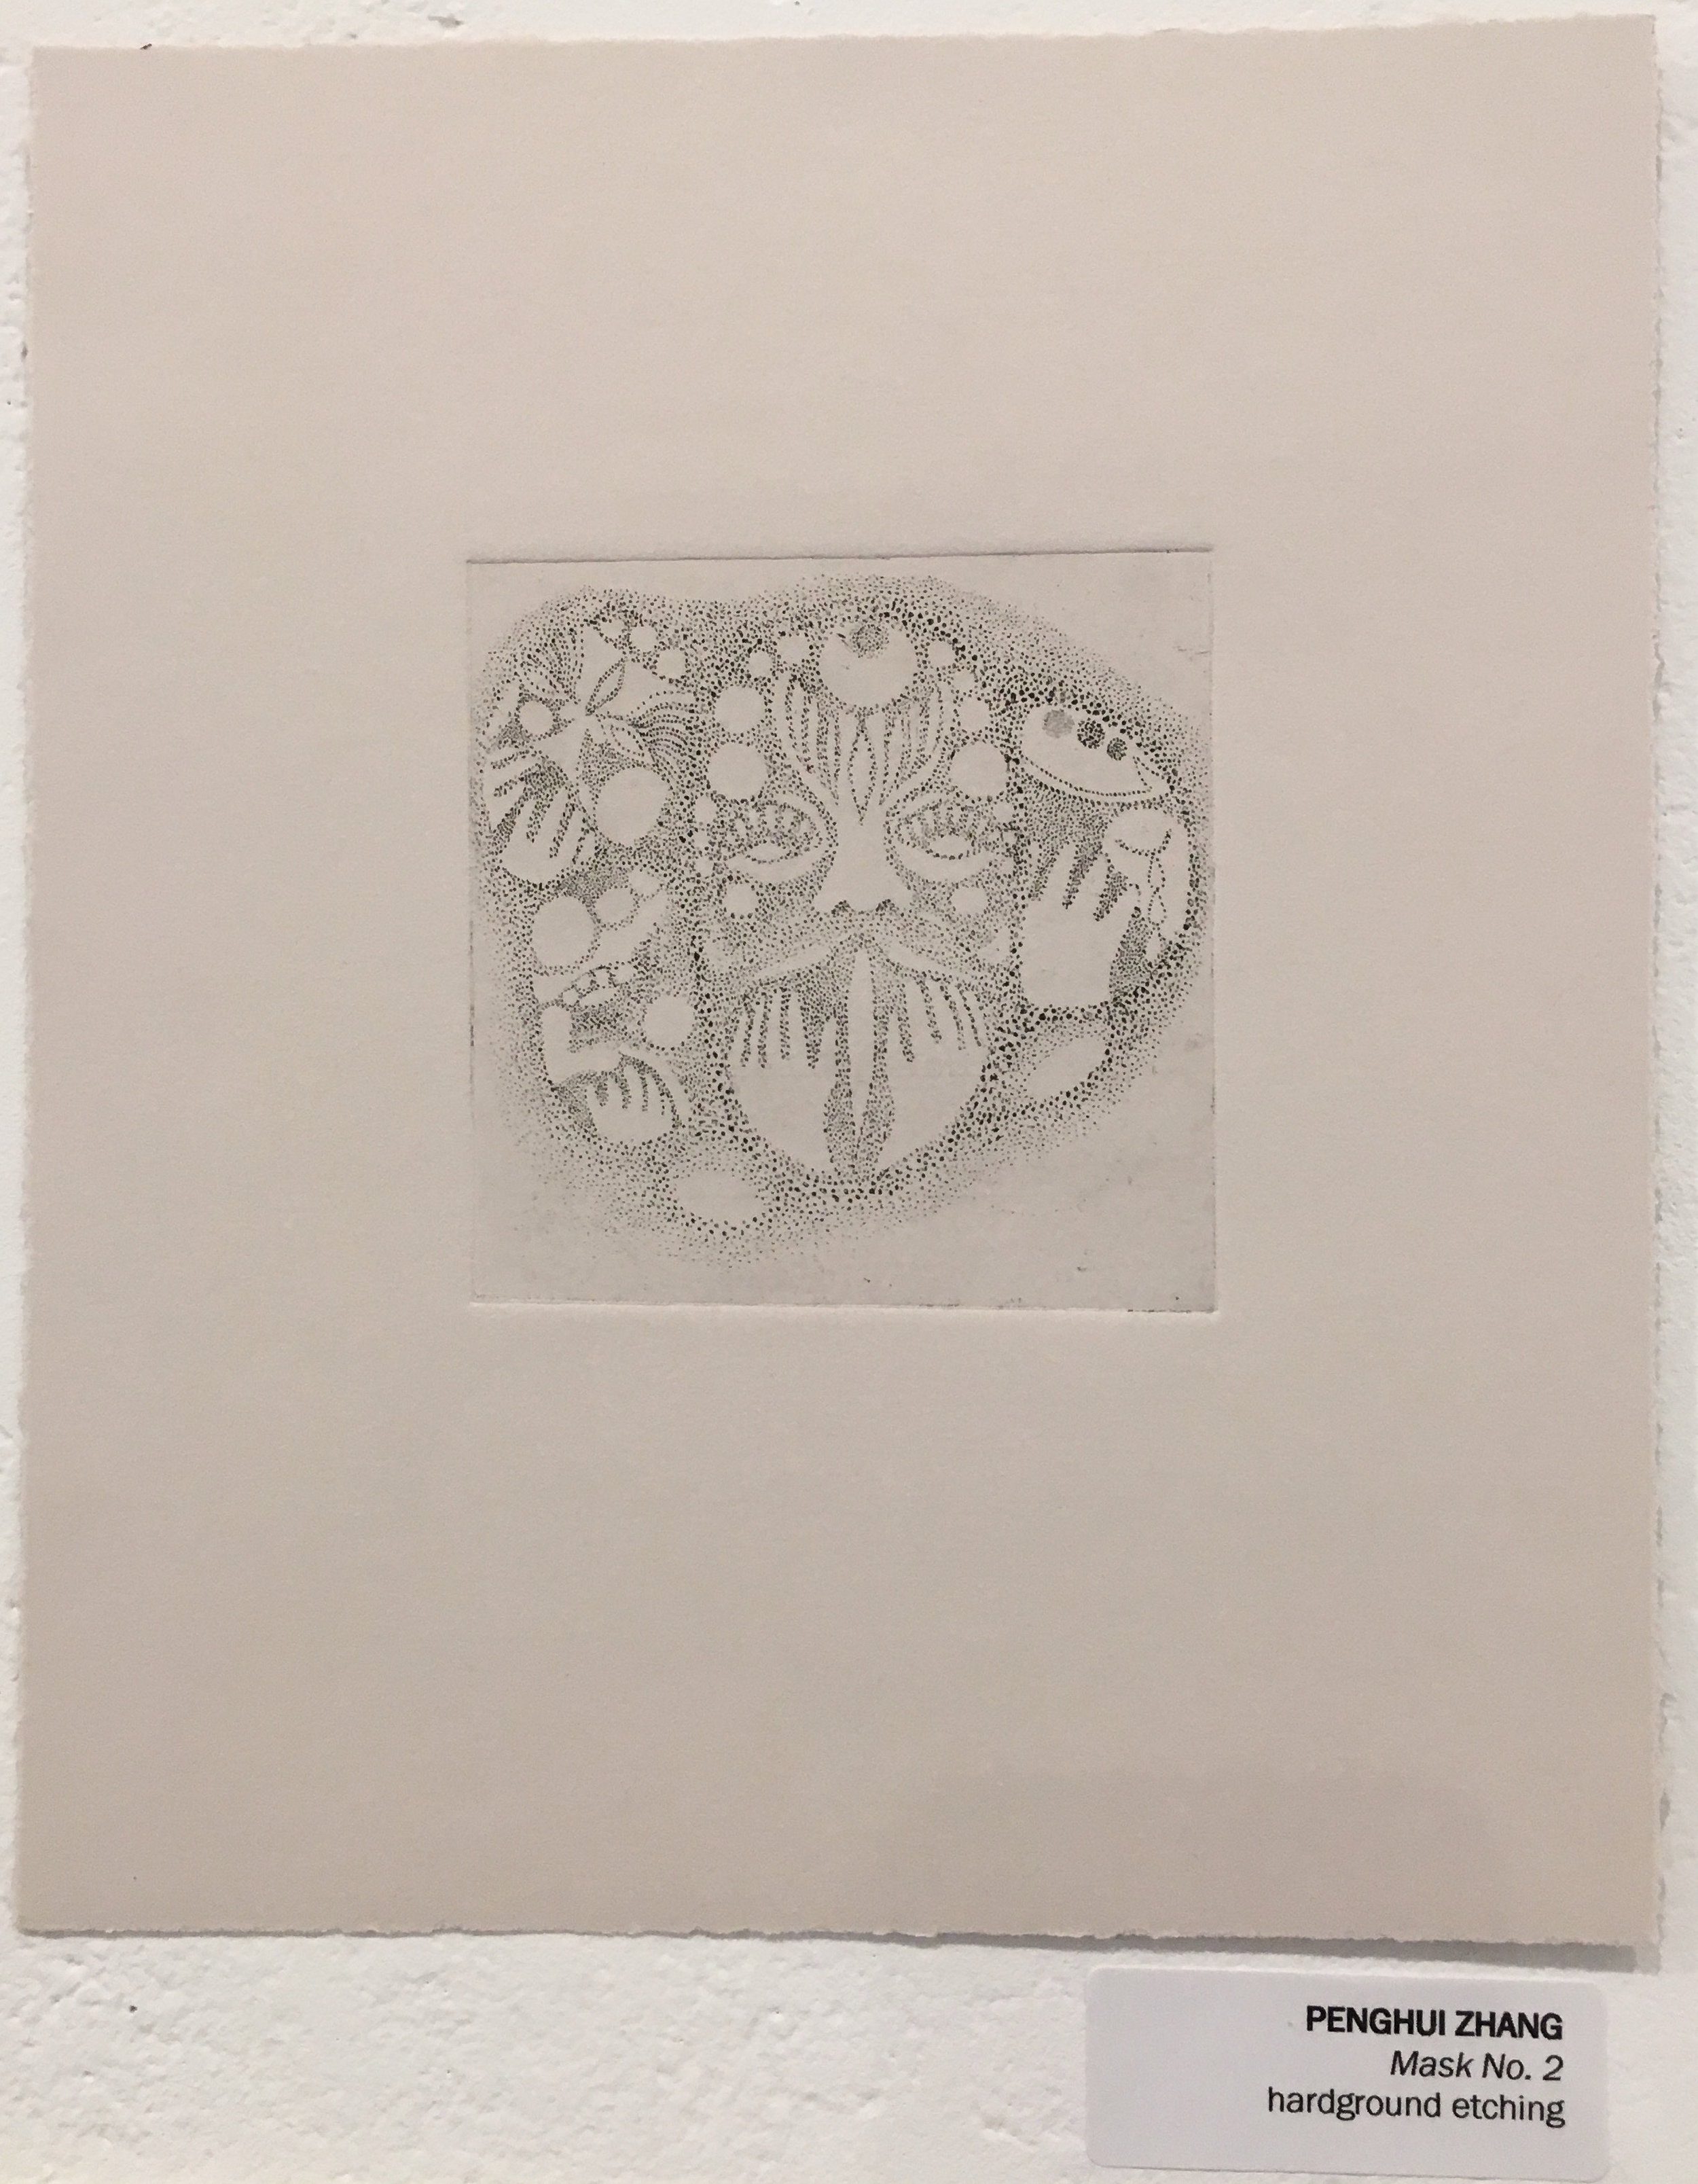 Penghui Zhang, "Mask No. 2" (hardground etching)